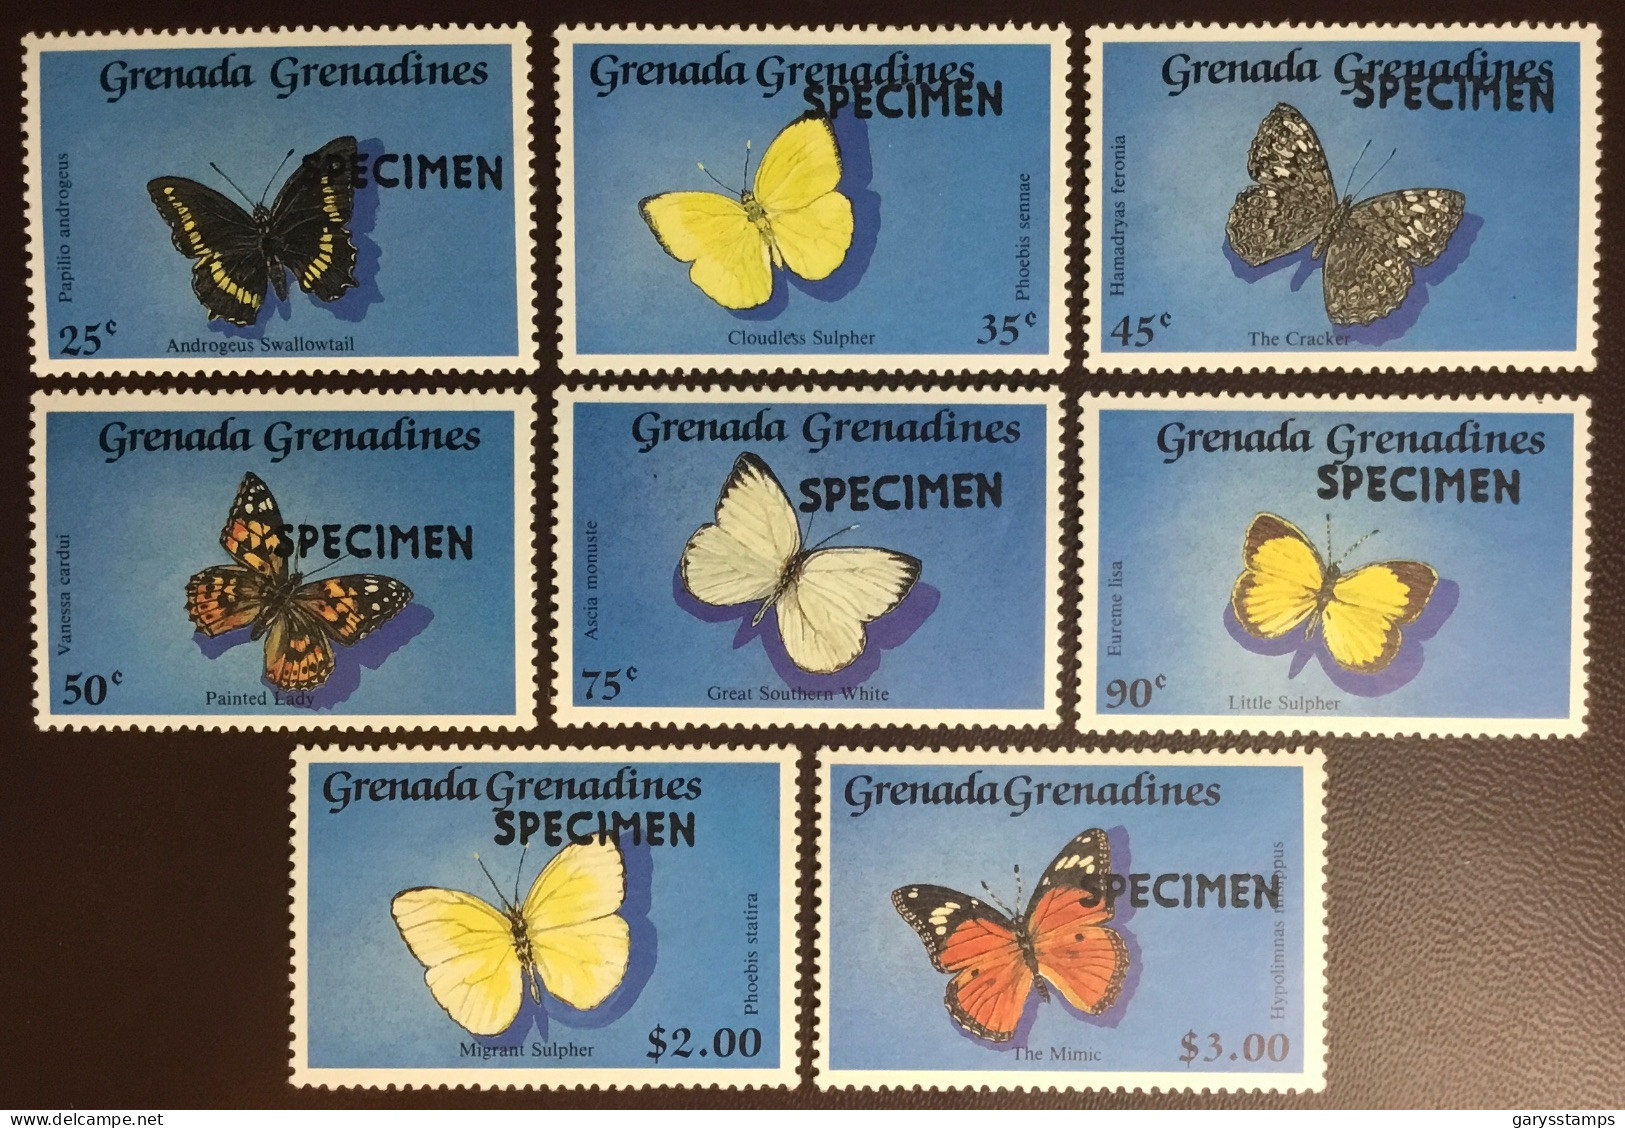 Grenada Grenadines 1989 Butterflies Specimen MNH - Papillons